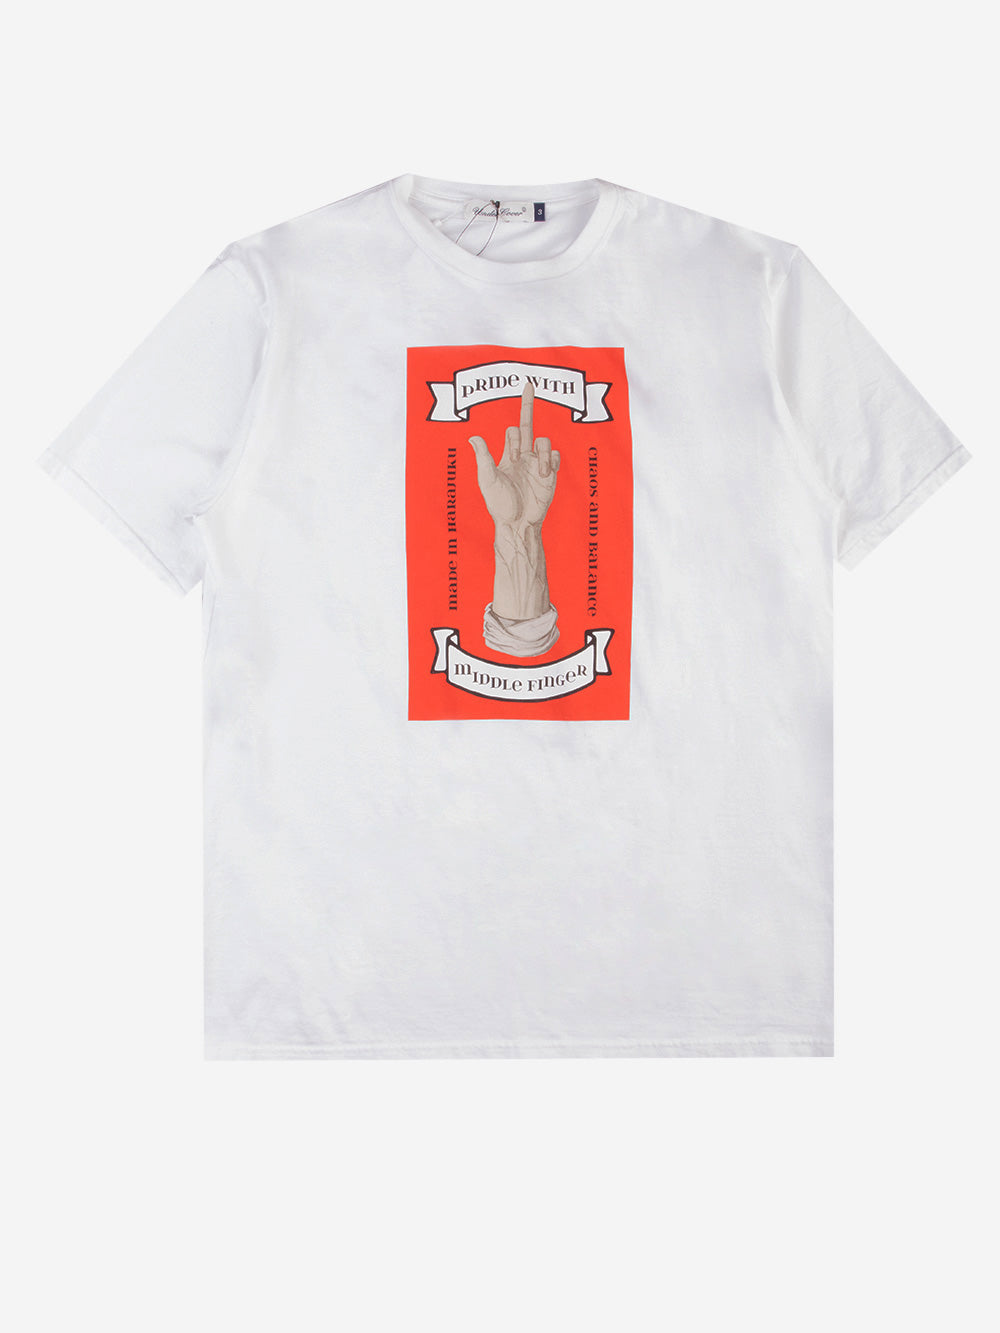 UNDERCOVER T-shirt 'Middle Finger' Bianco Urbanstaroma